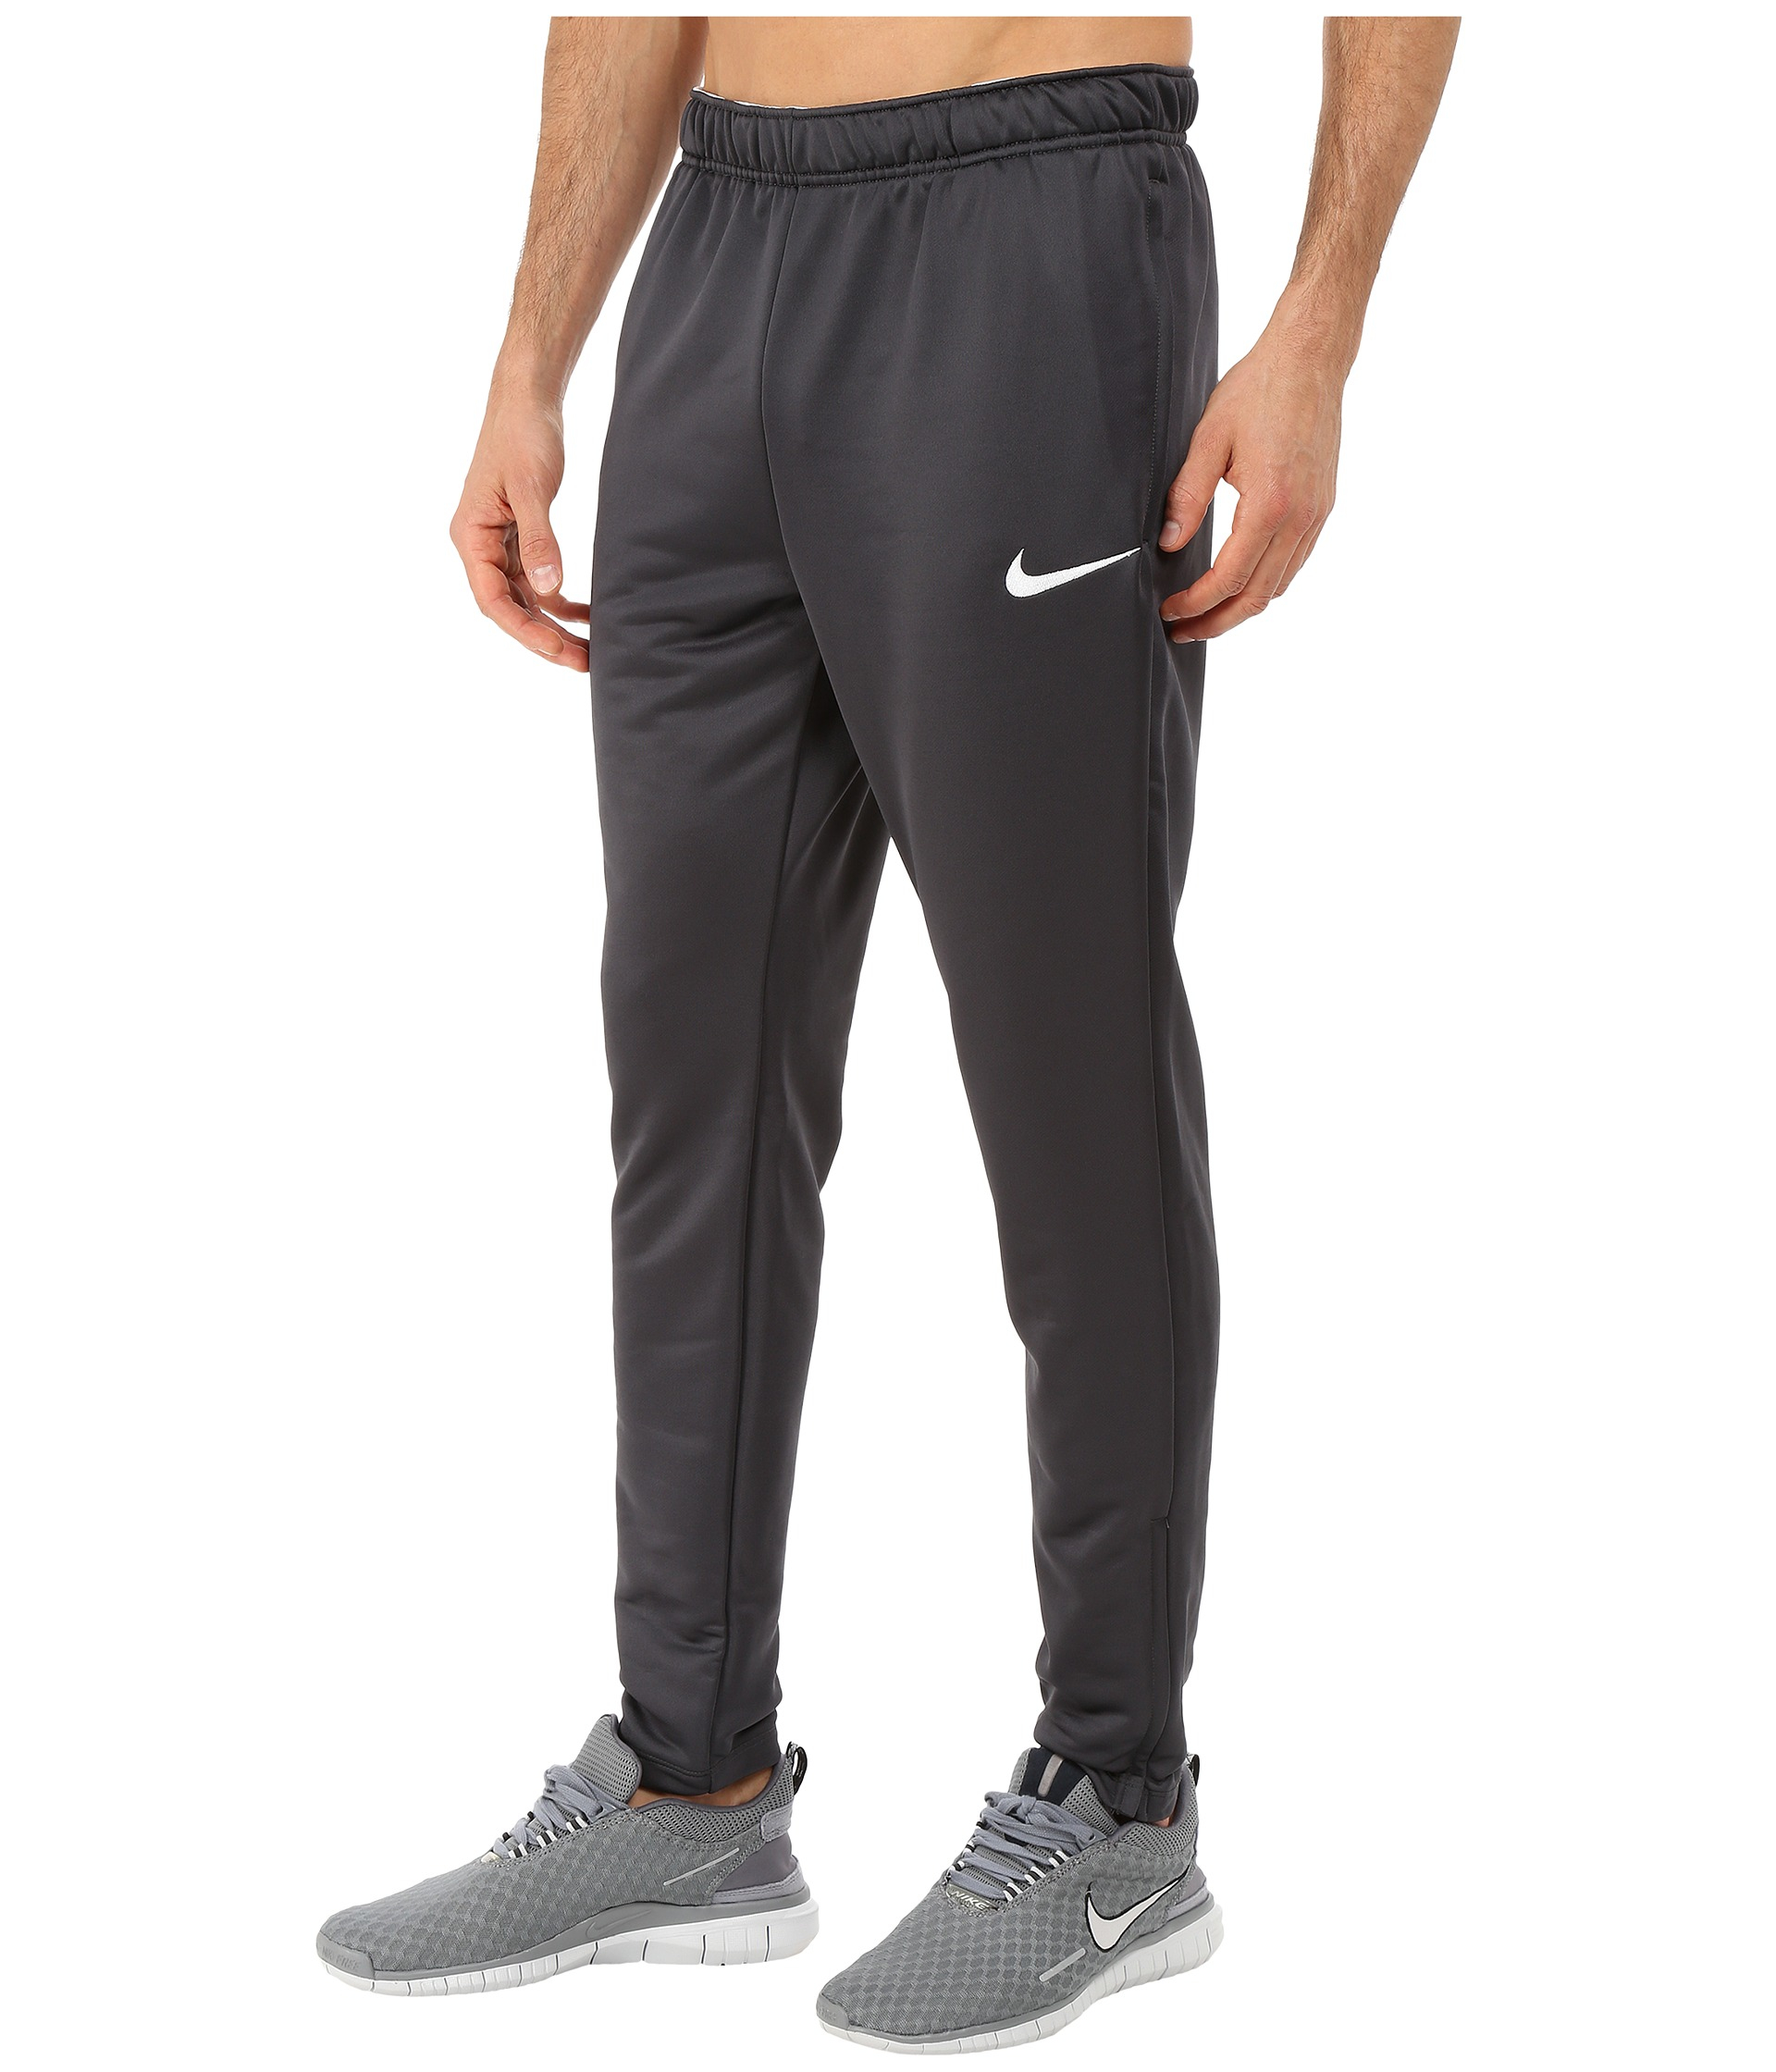 Lyst - Nike Academy Tech Pants in Gray for Men